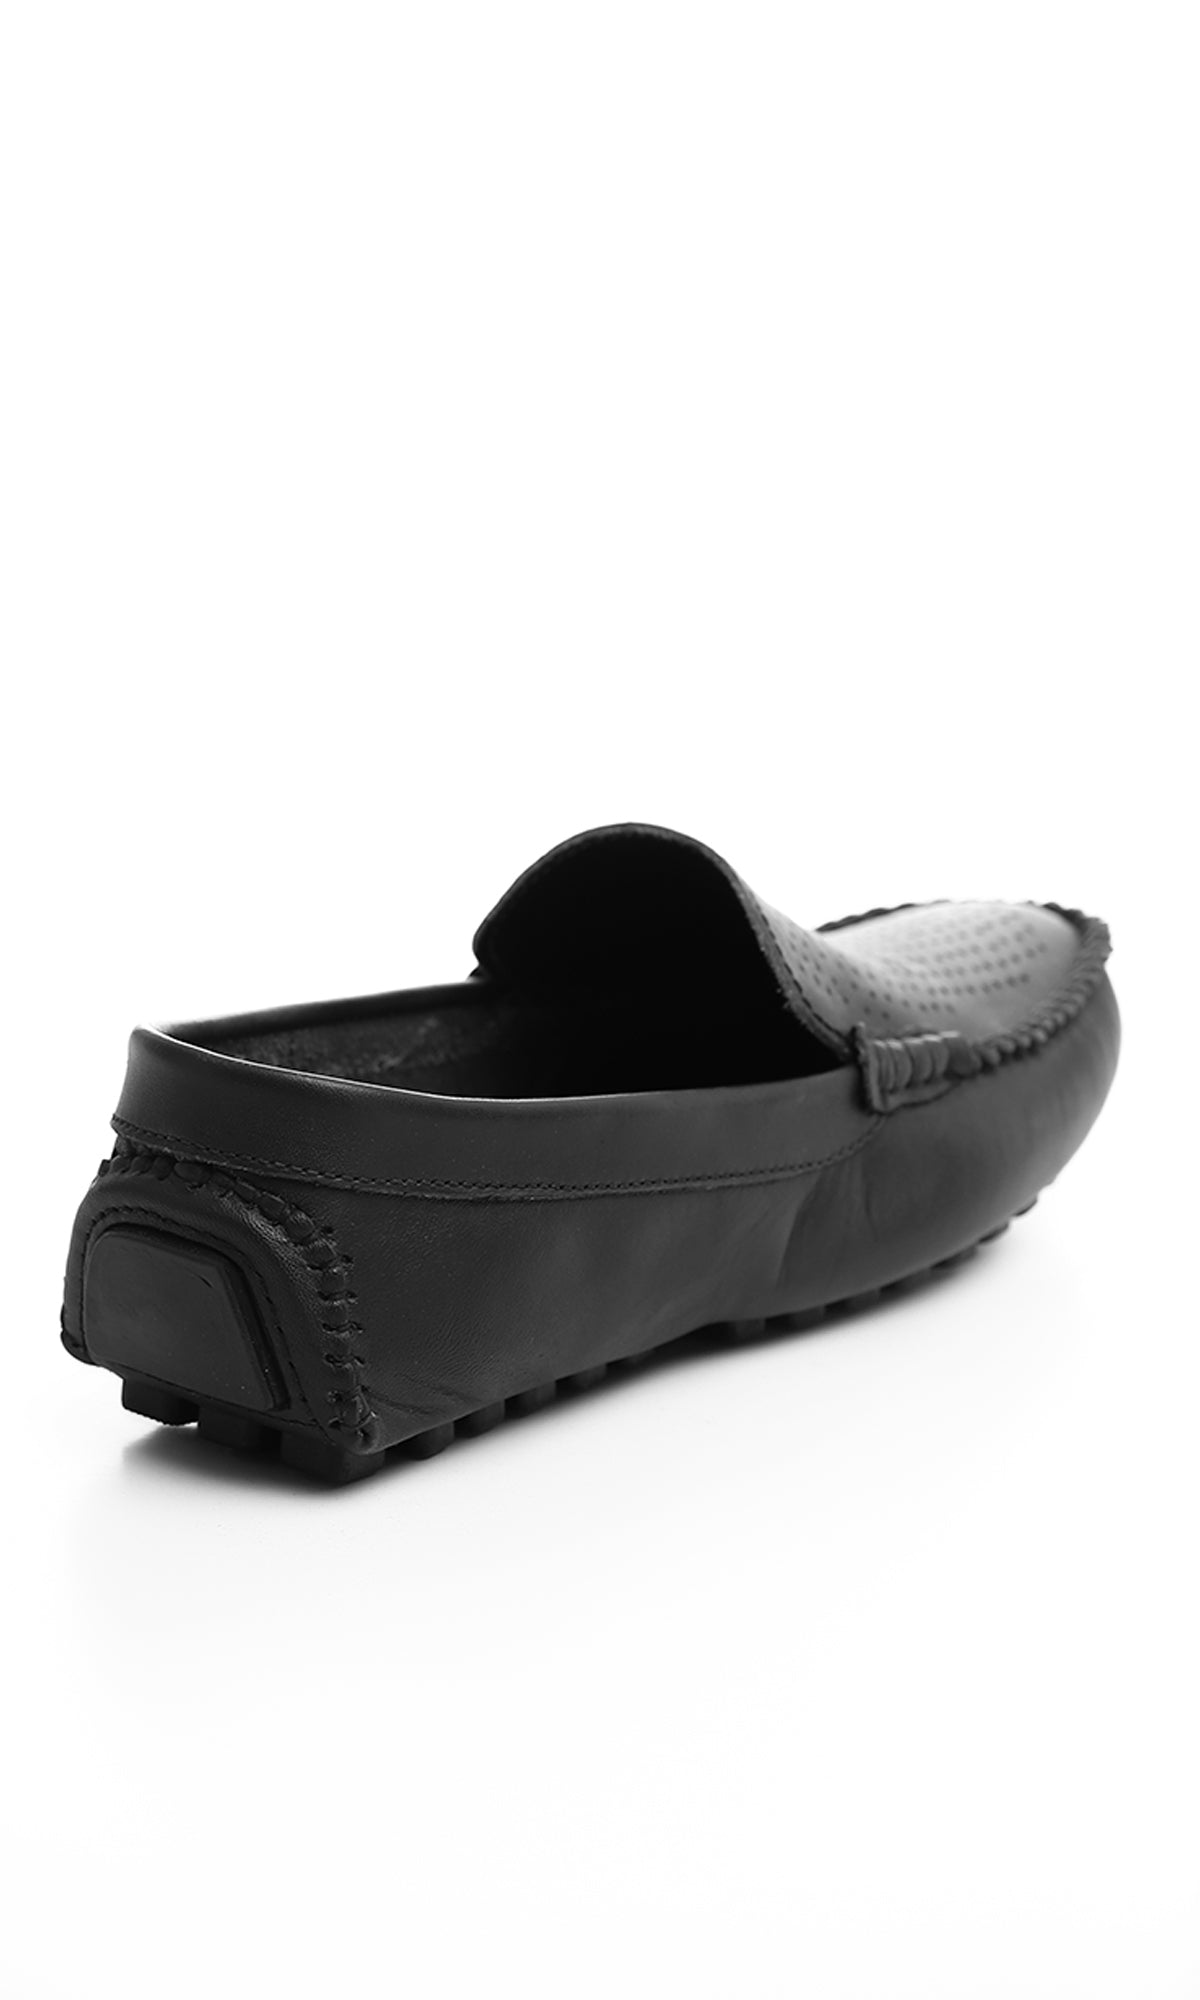 O174706 Slip On Leather Black Loafers